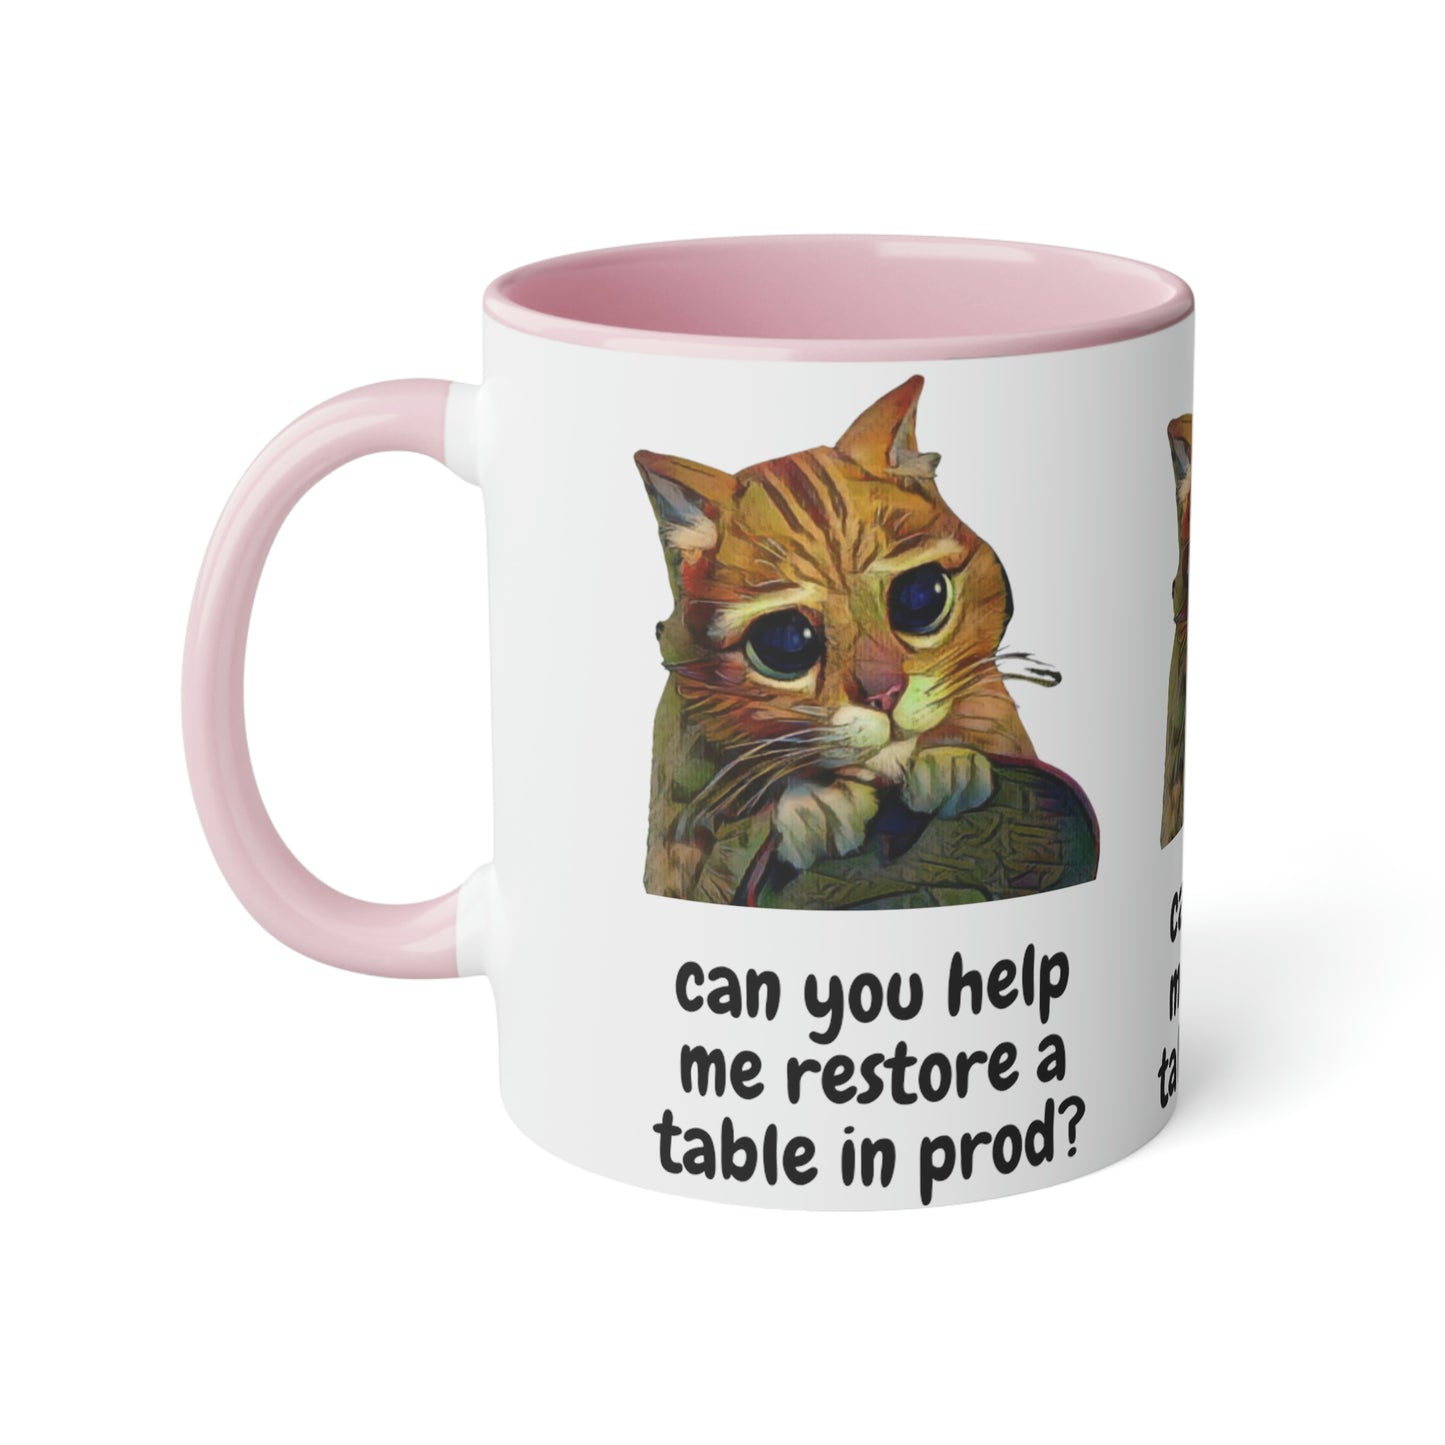 MemeMug restore table in prod cute cat